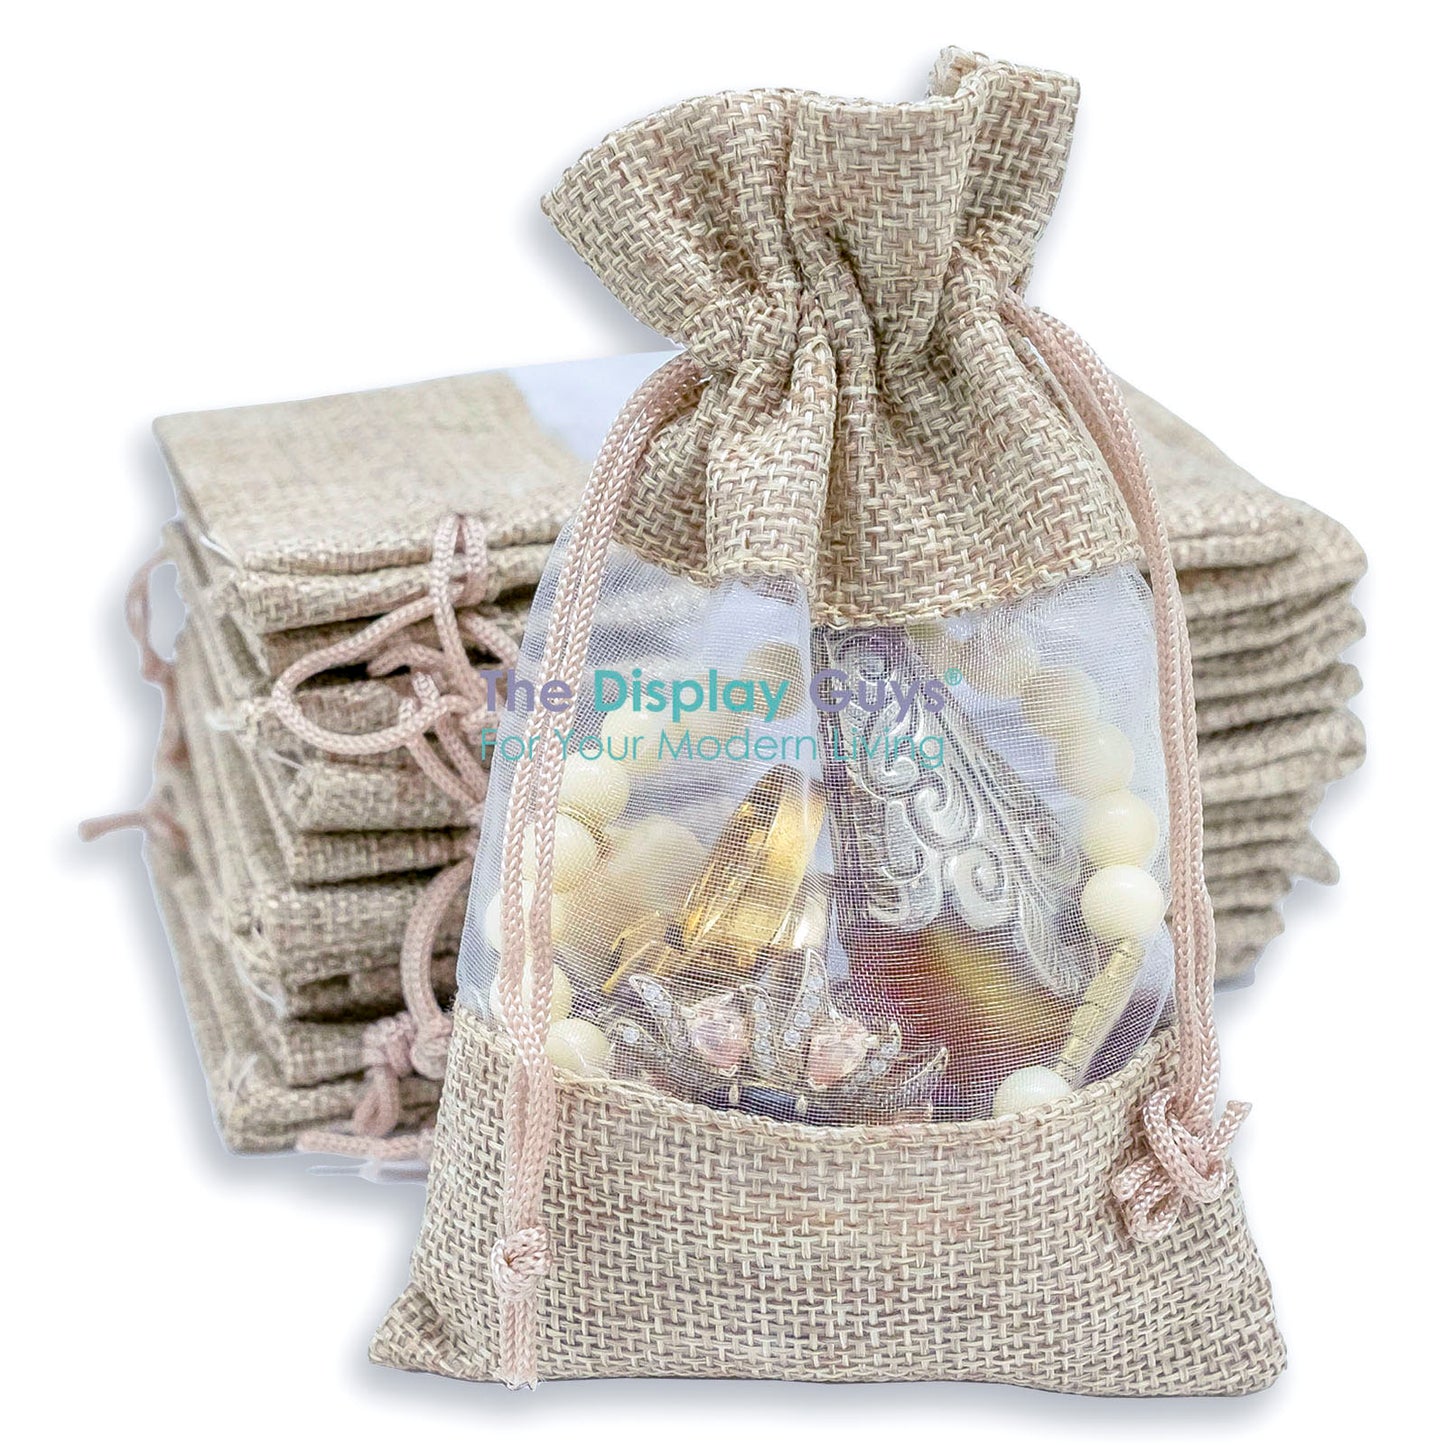 5" x 7" Linen Burlap and Sheer Organza Gift Bag